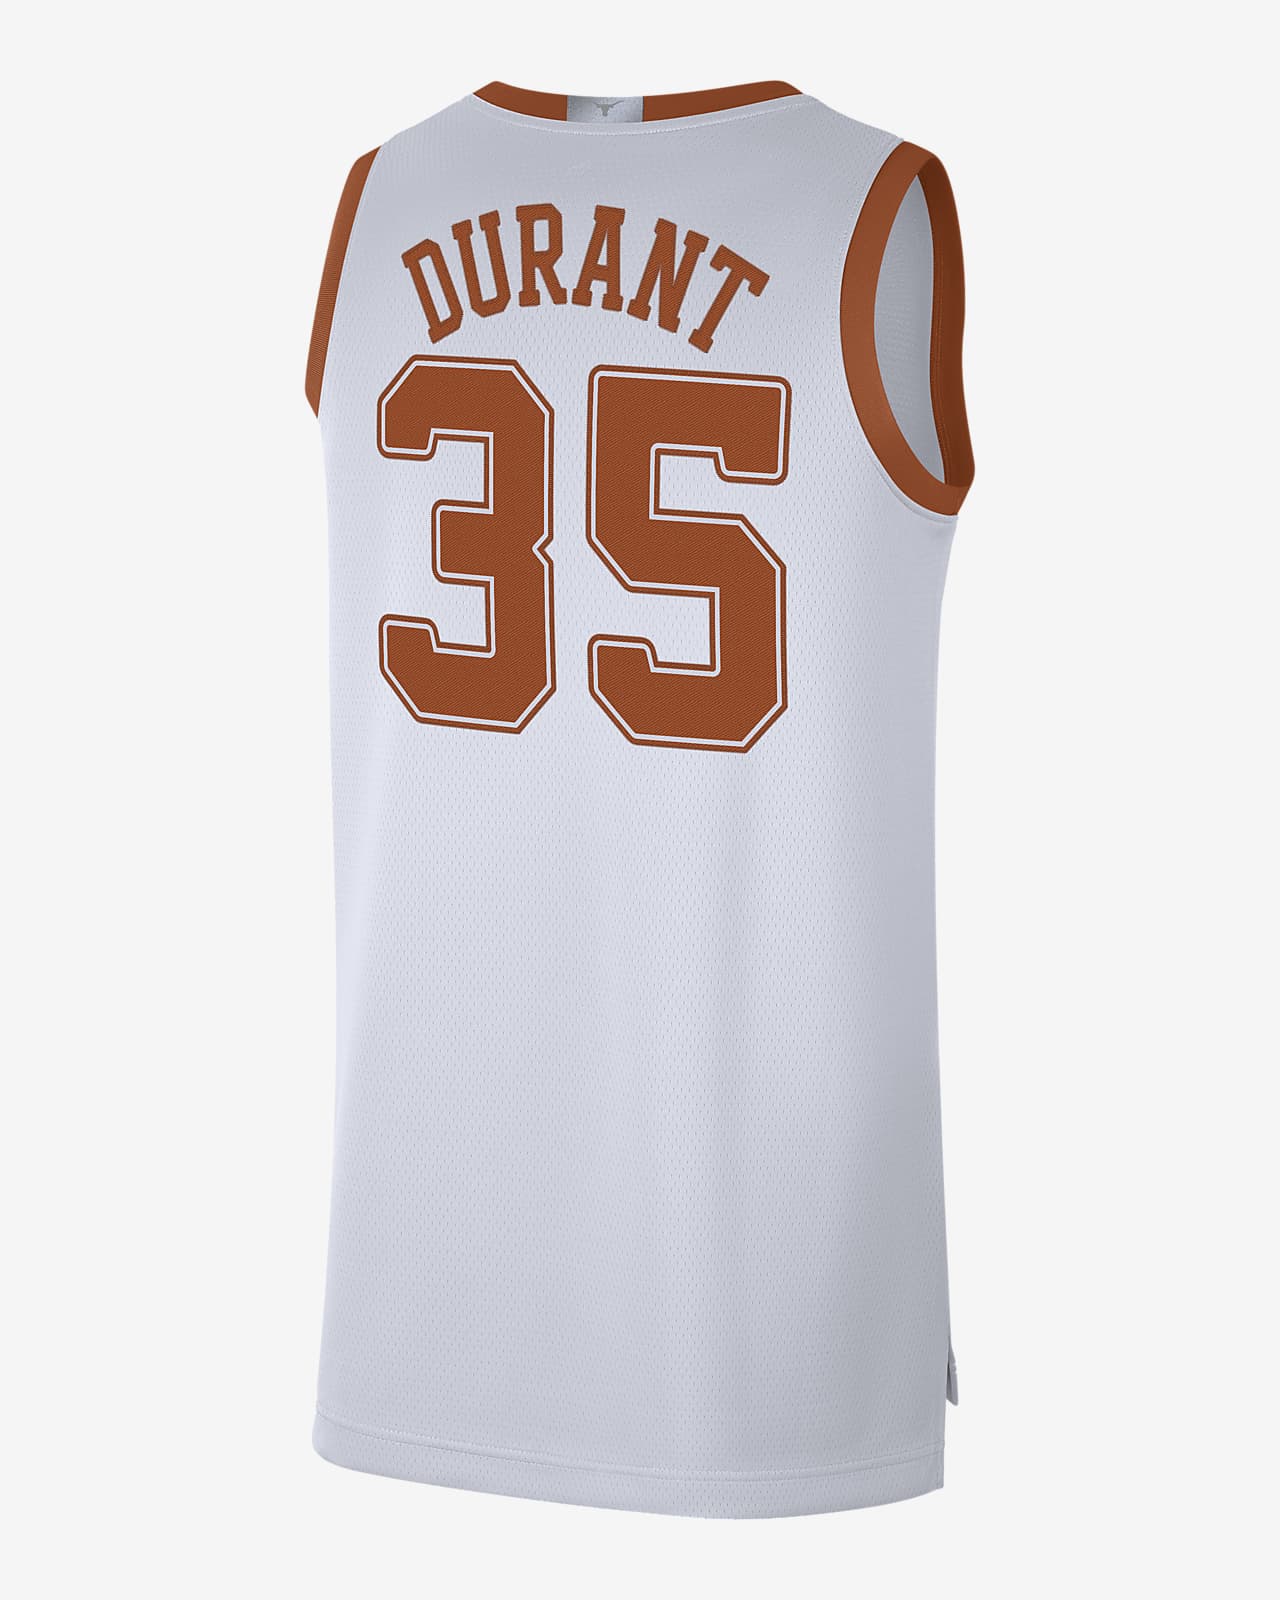 ángel Empleado escapar Nike College (Texas) (Kevin Durant) Men's Limited Basketball Jersey. Nike .com